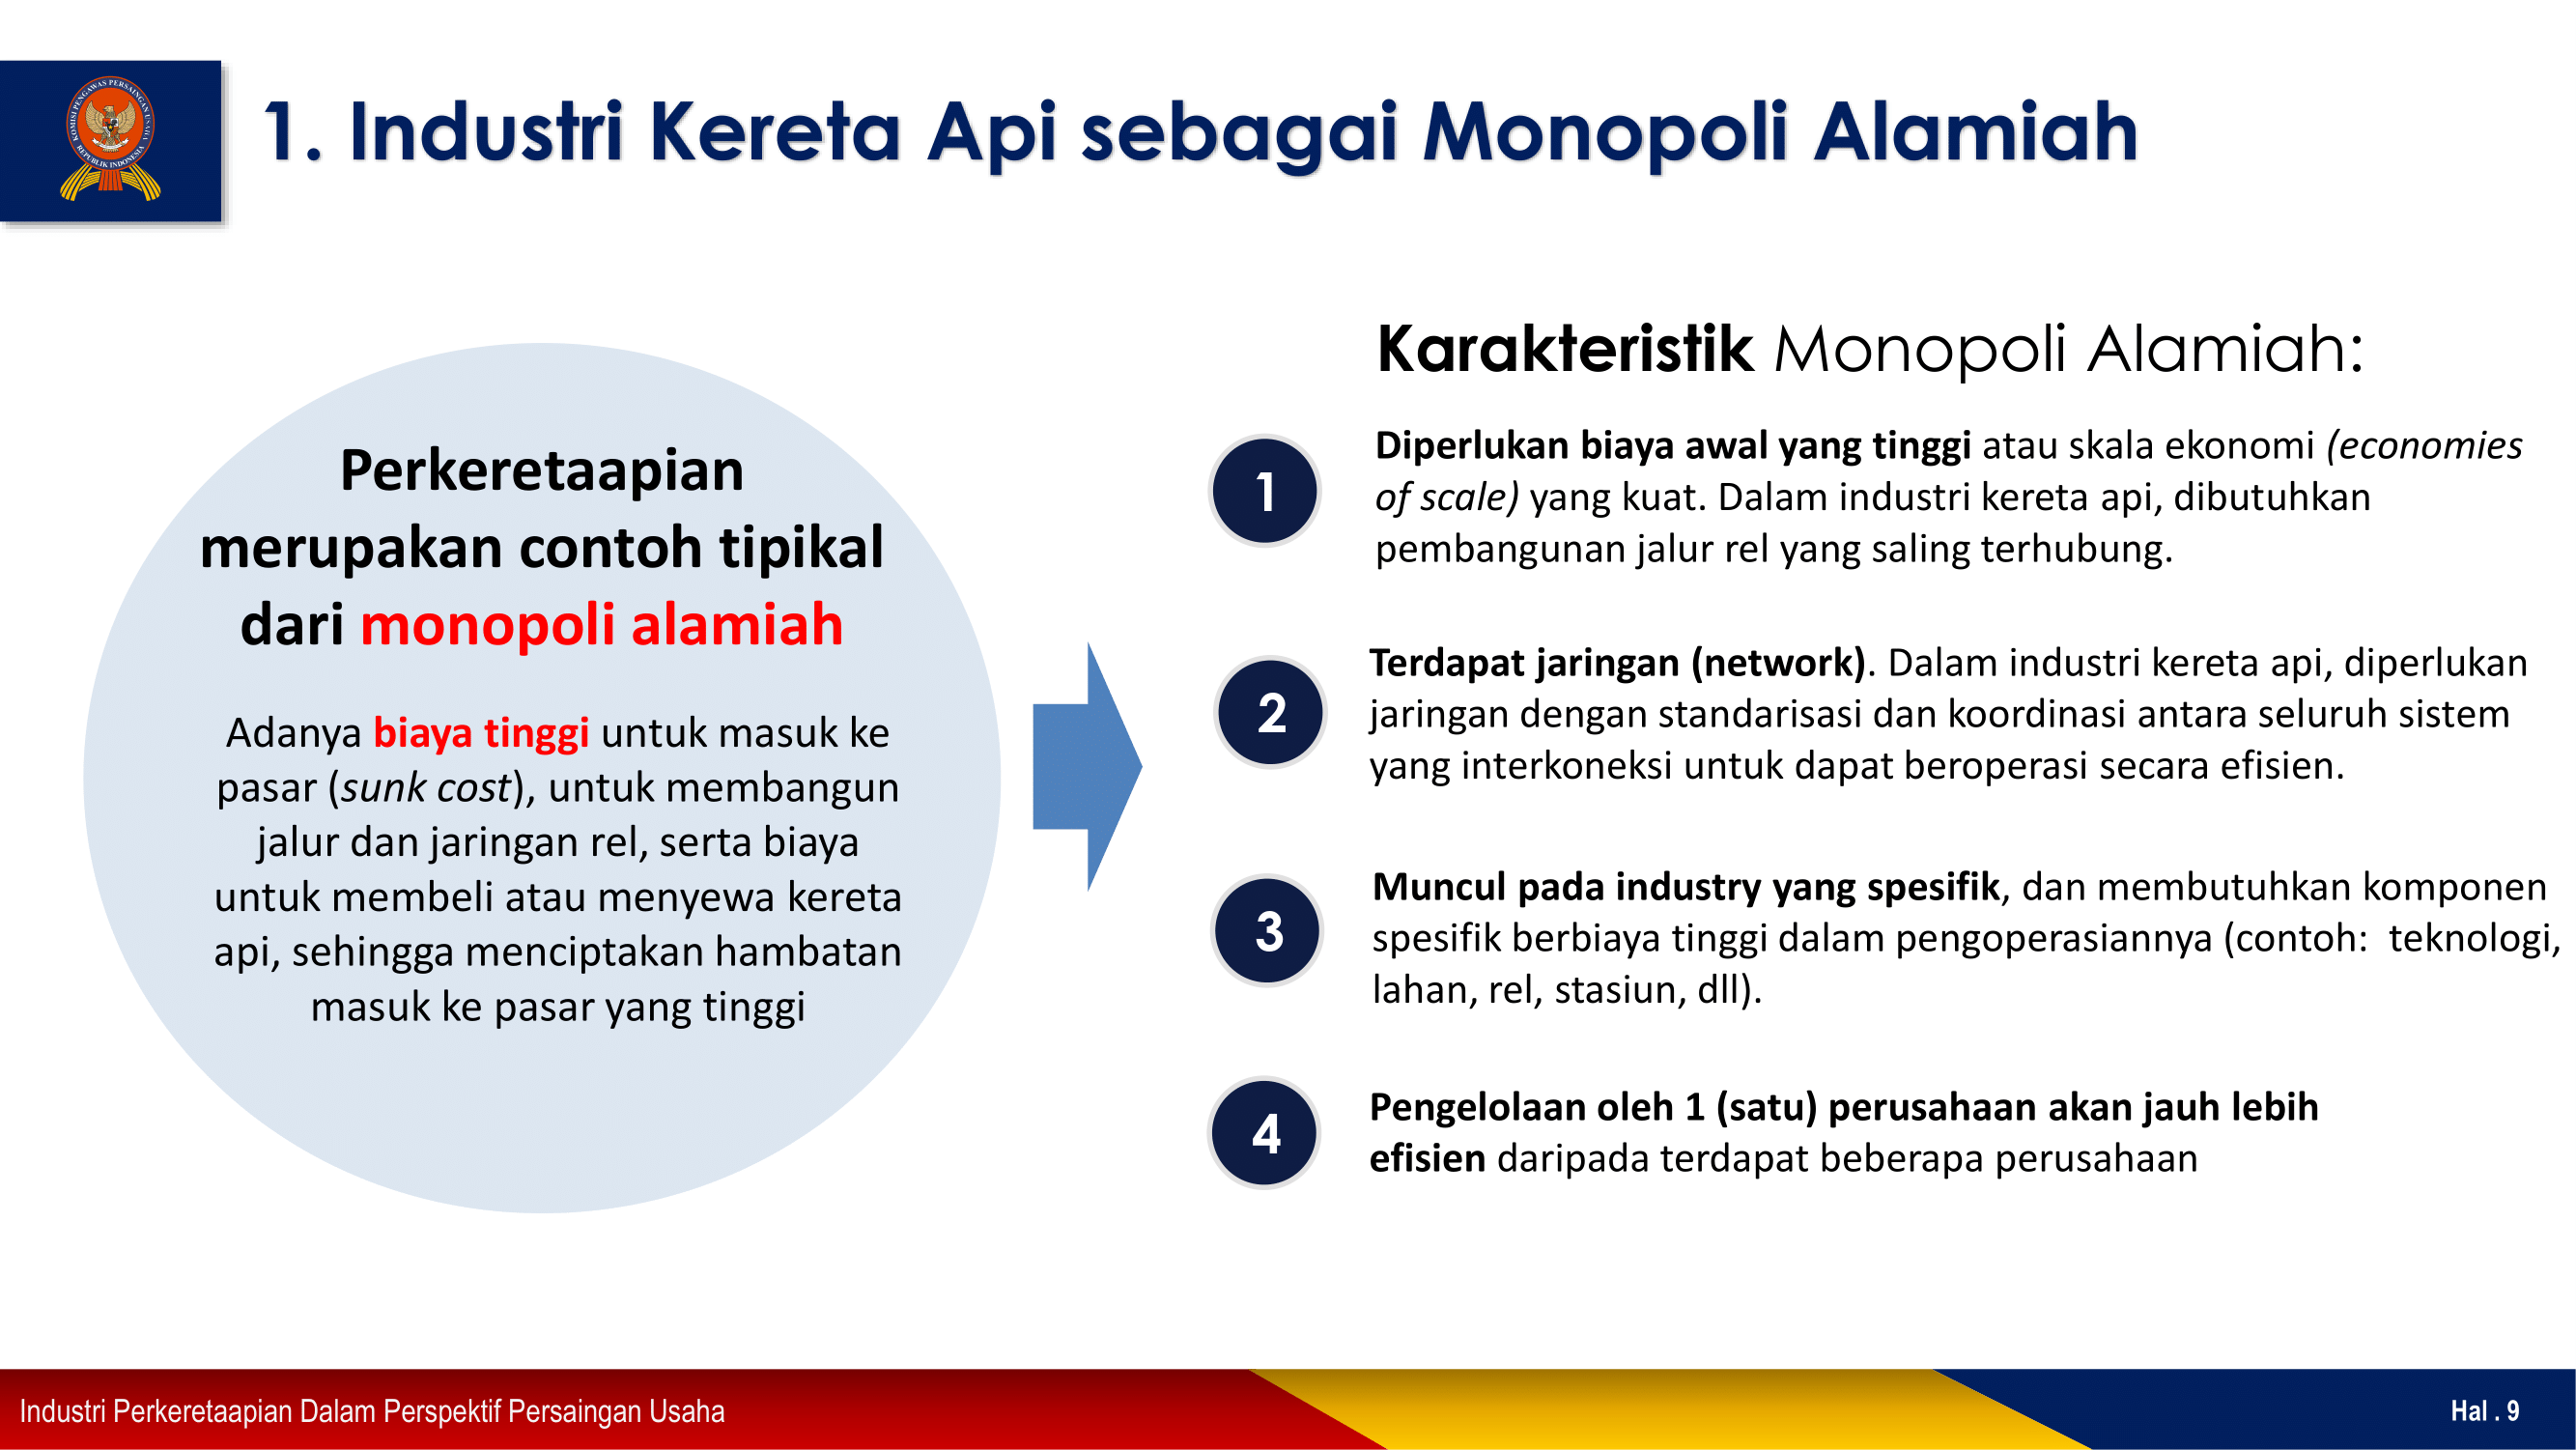 monopoli alamiah KA